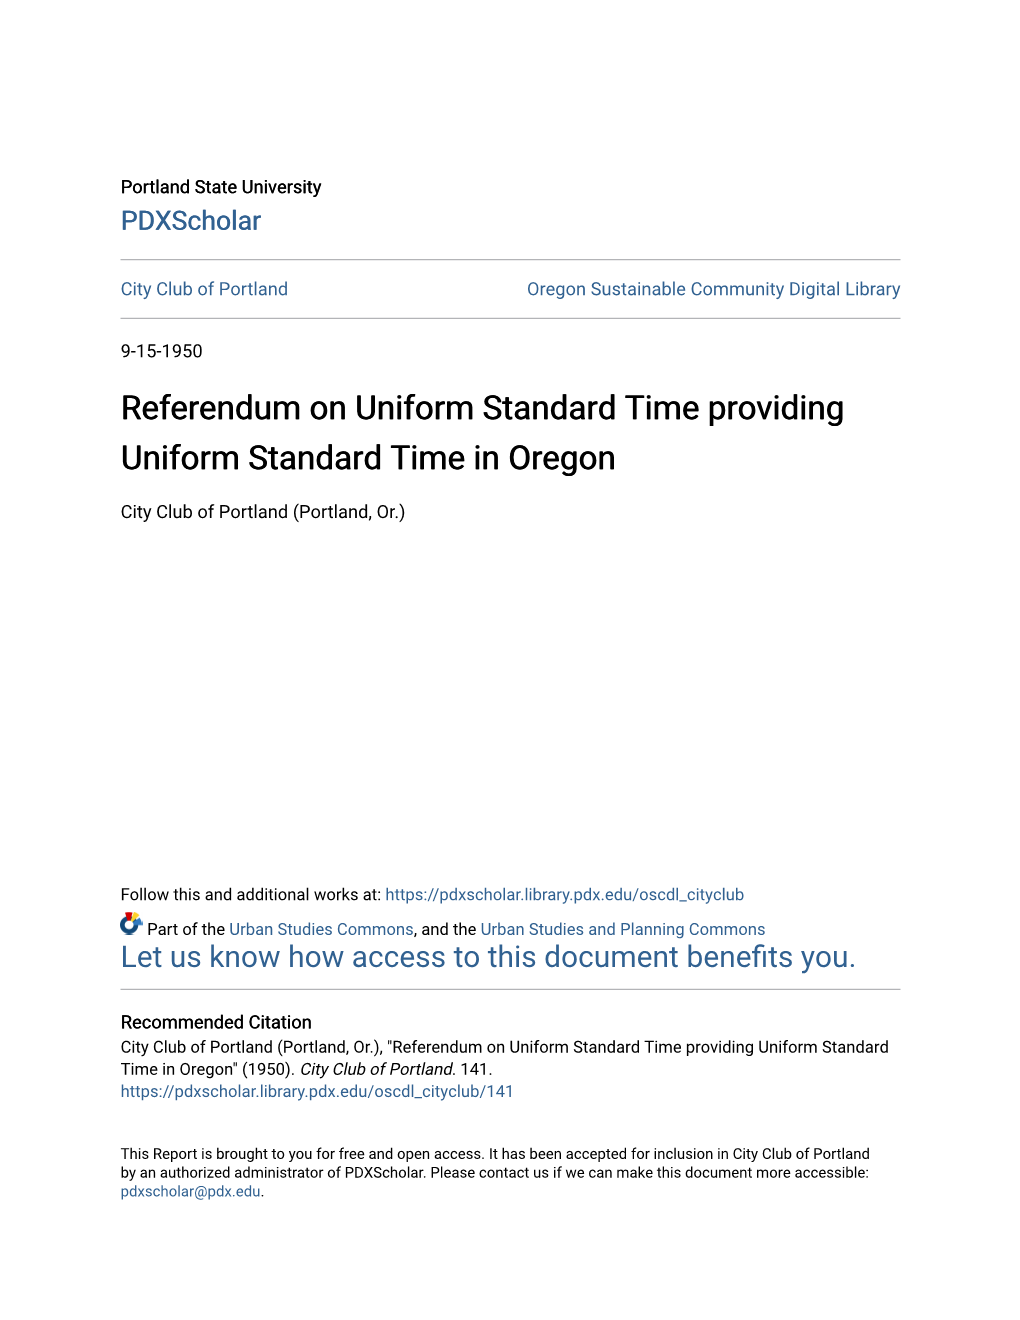 Referendum on Uniform Standard Time Providing Uniform Standard Time in Oregon